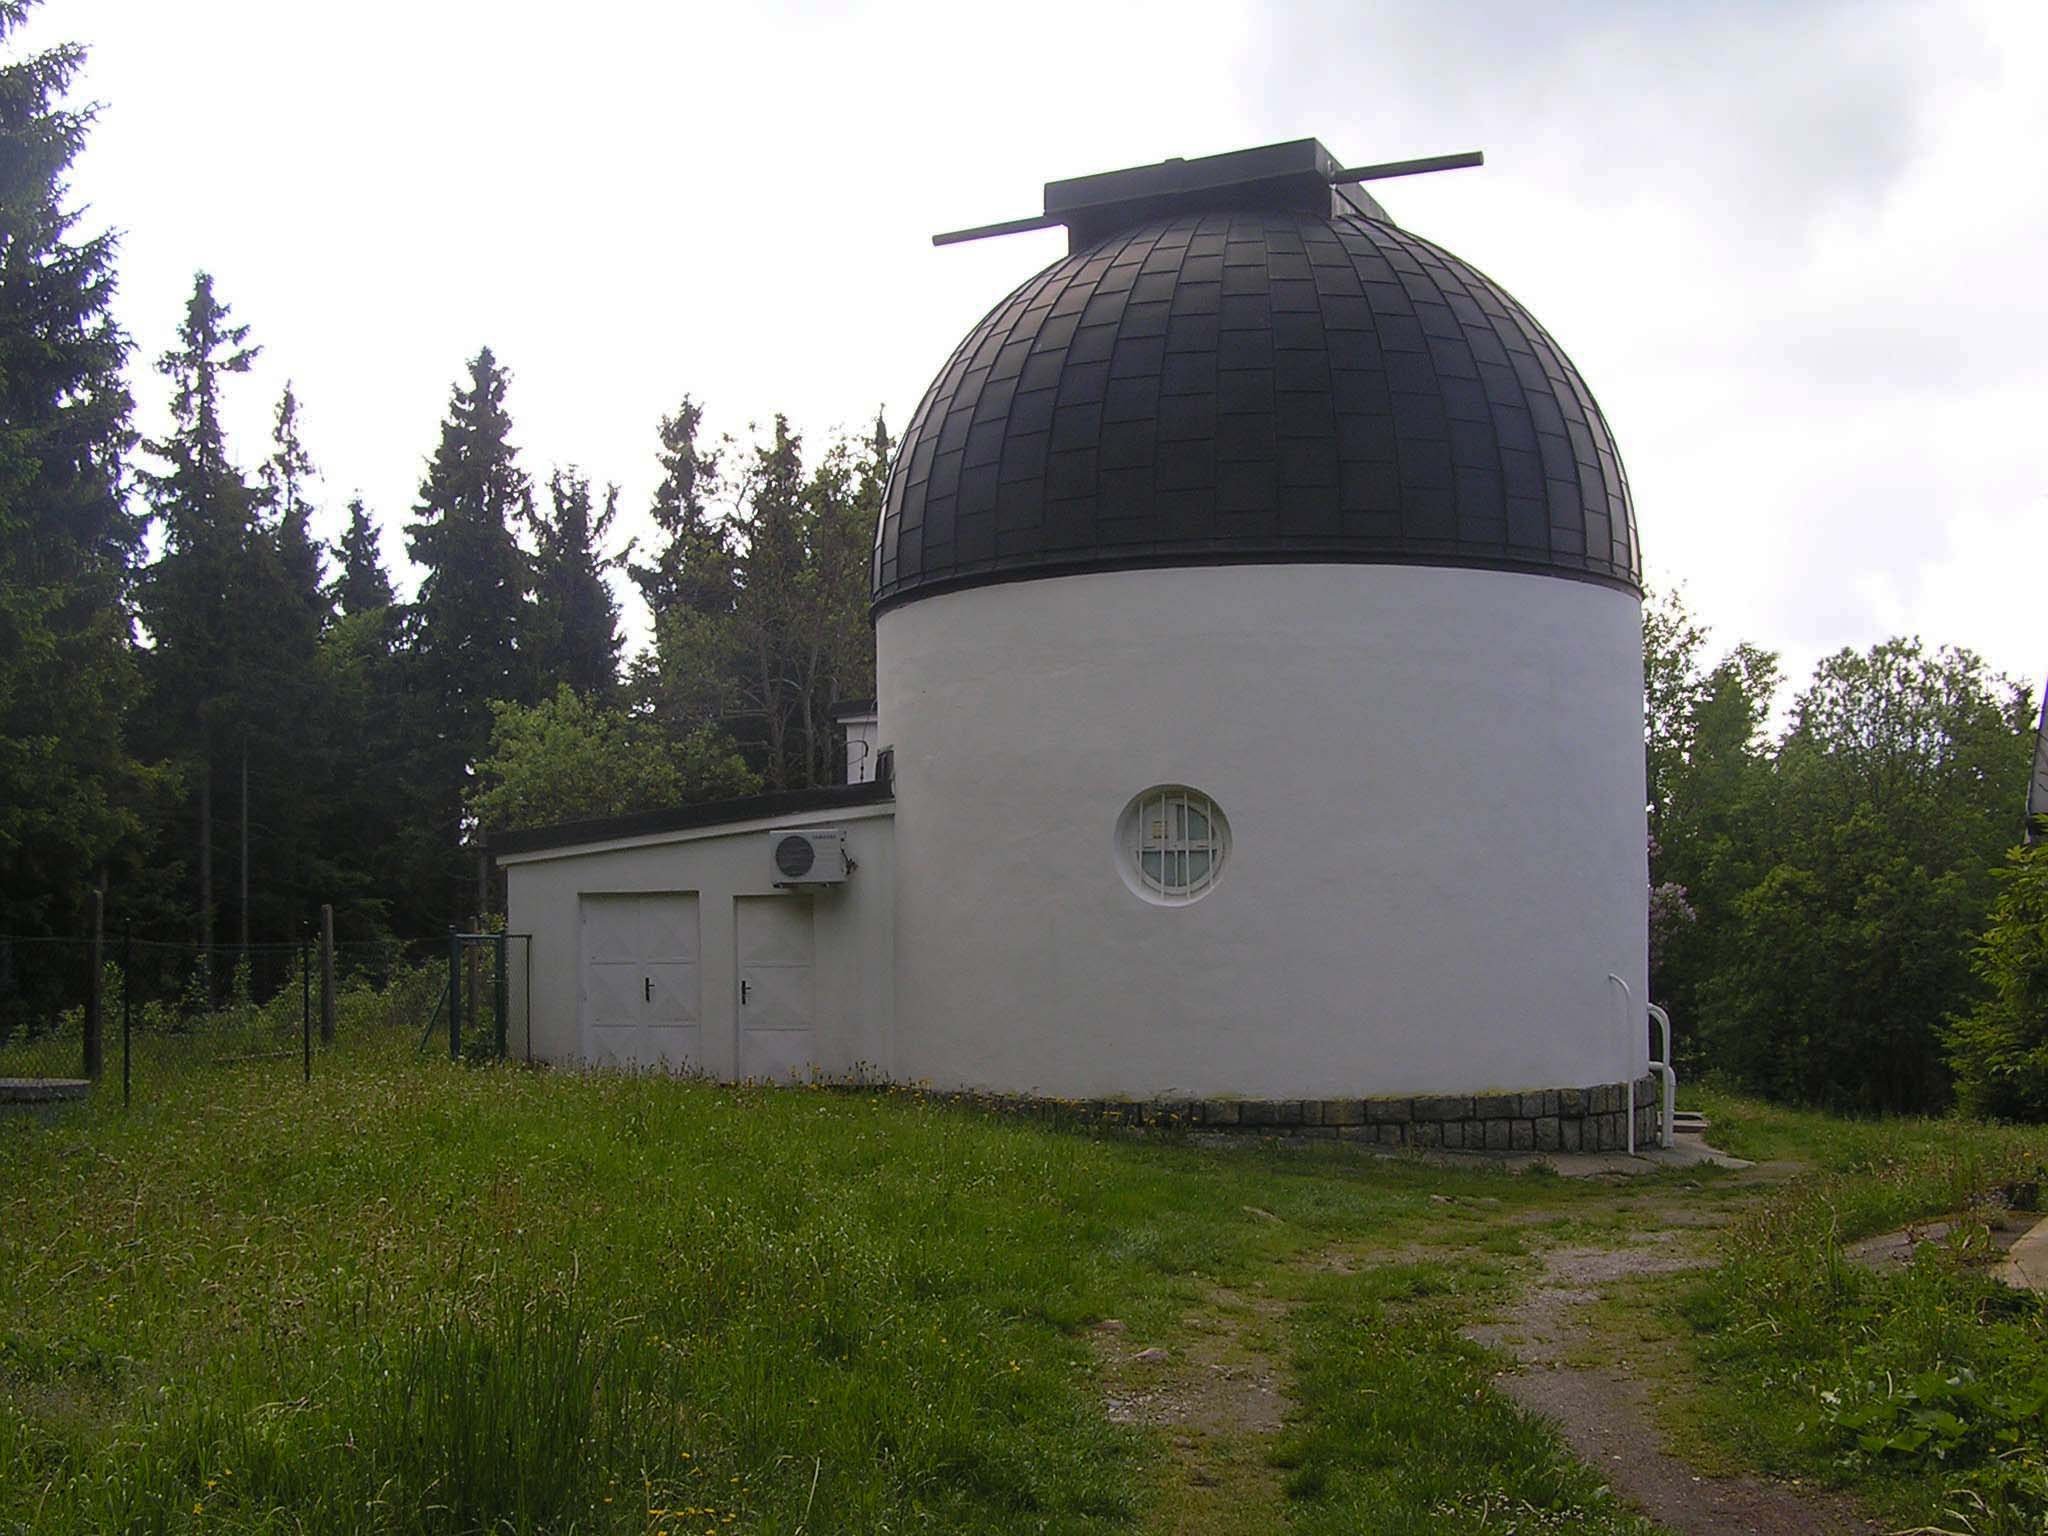 Pilsen Observatory